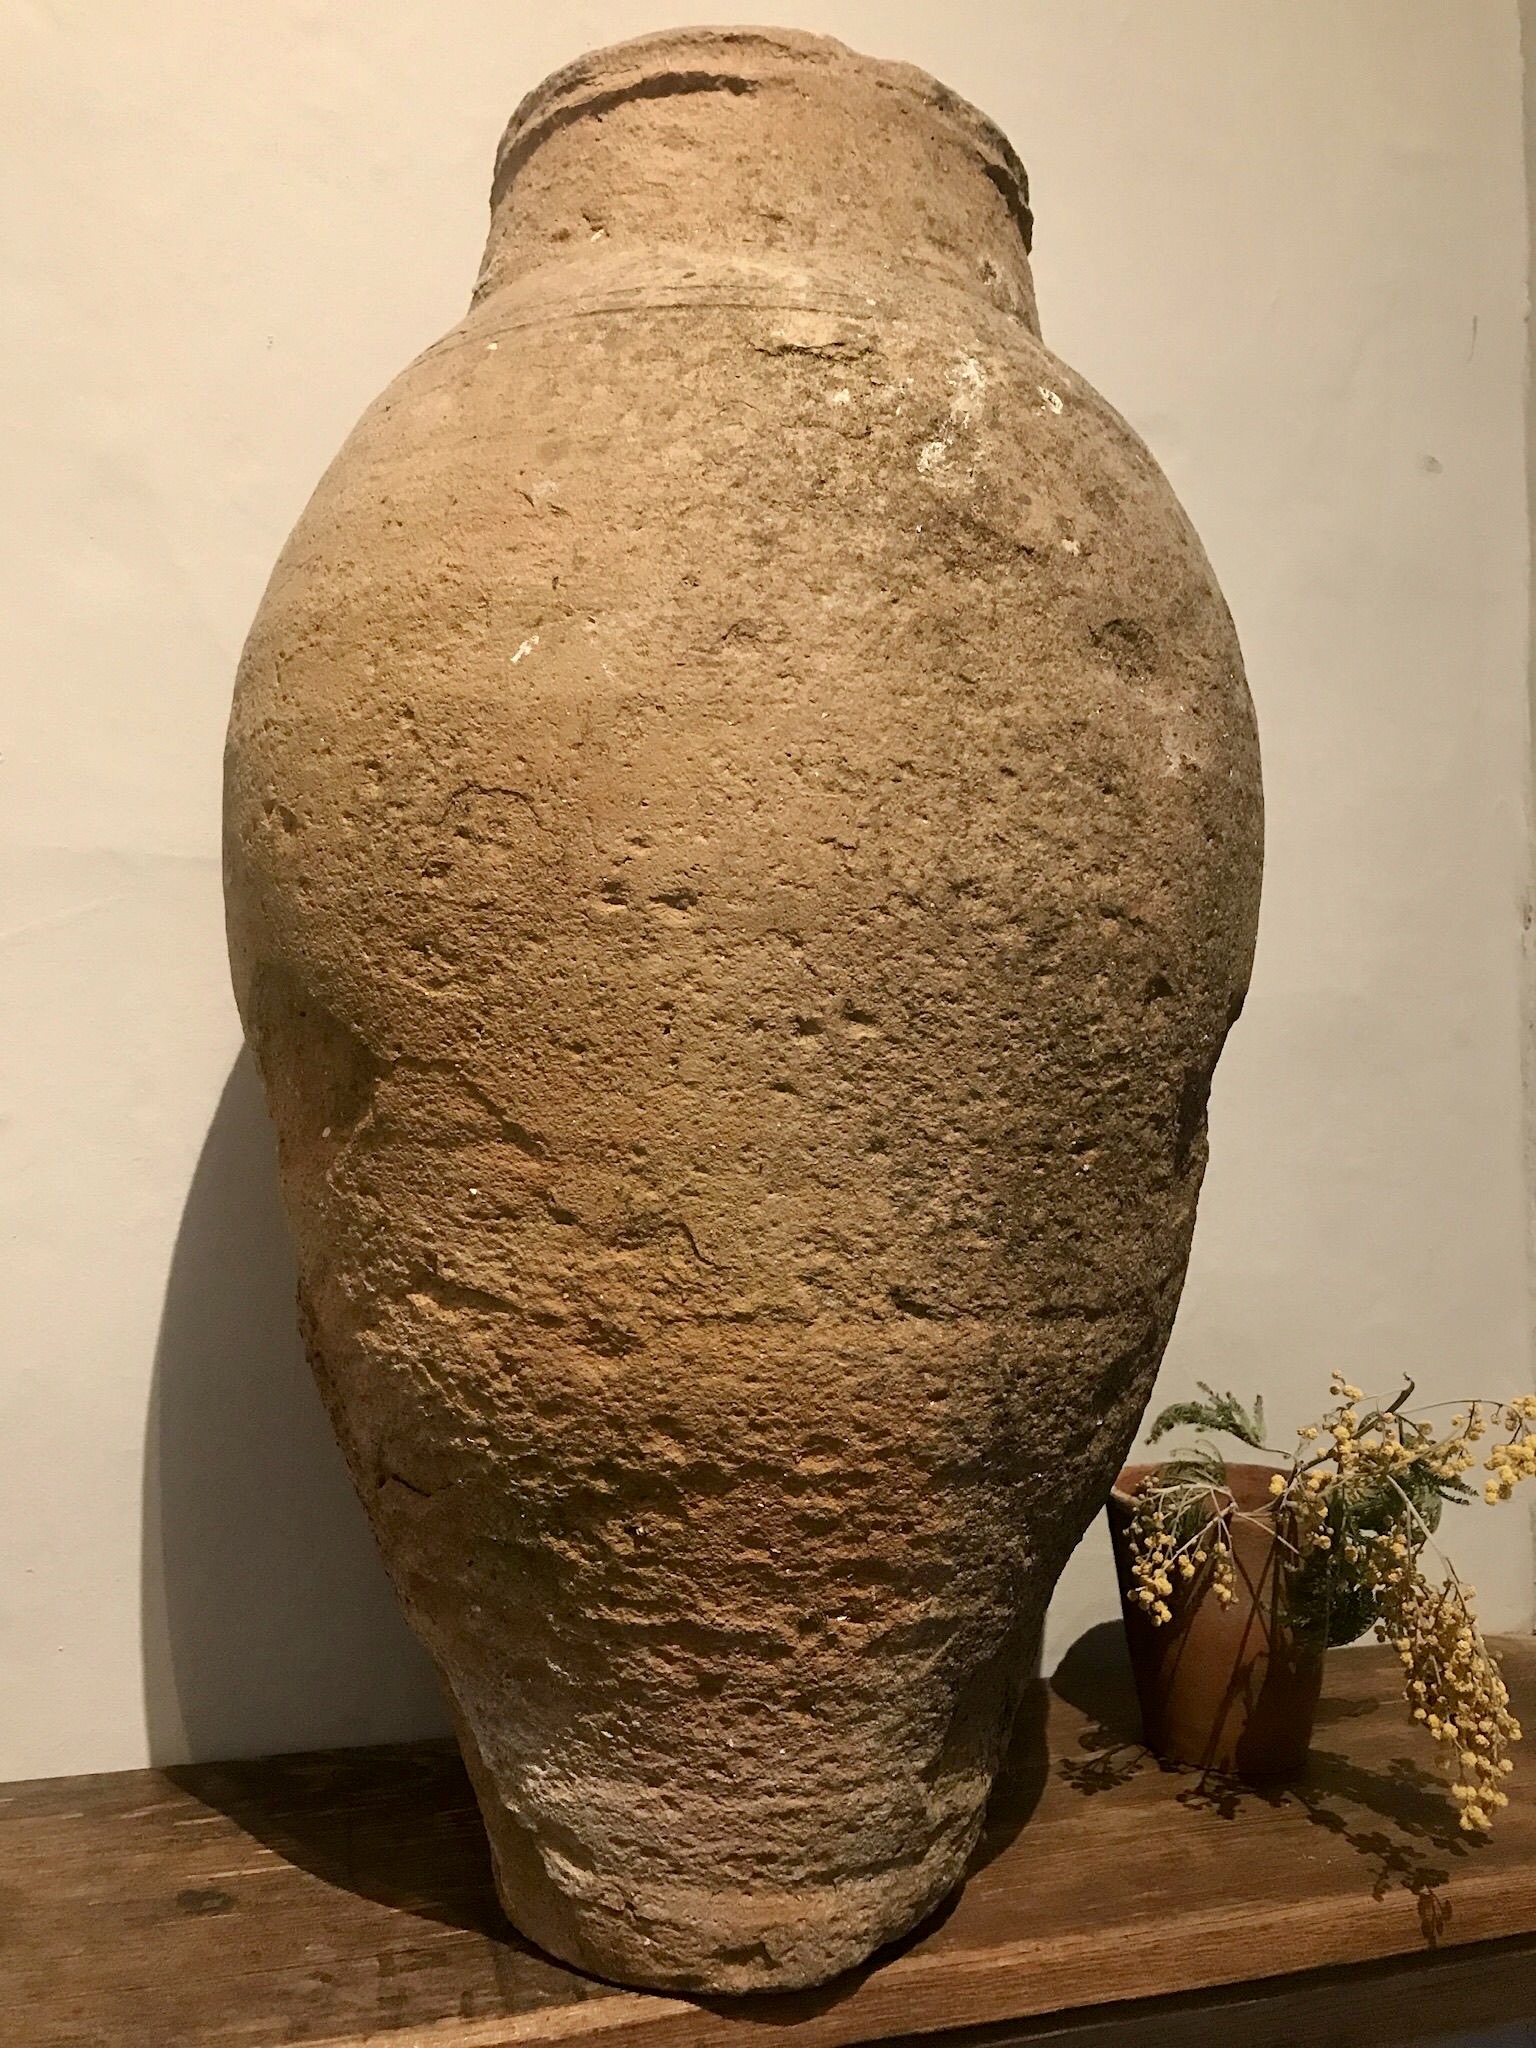 Stone vase on a wooden shelf